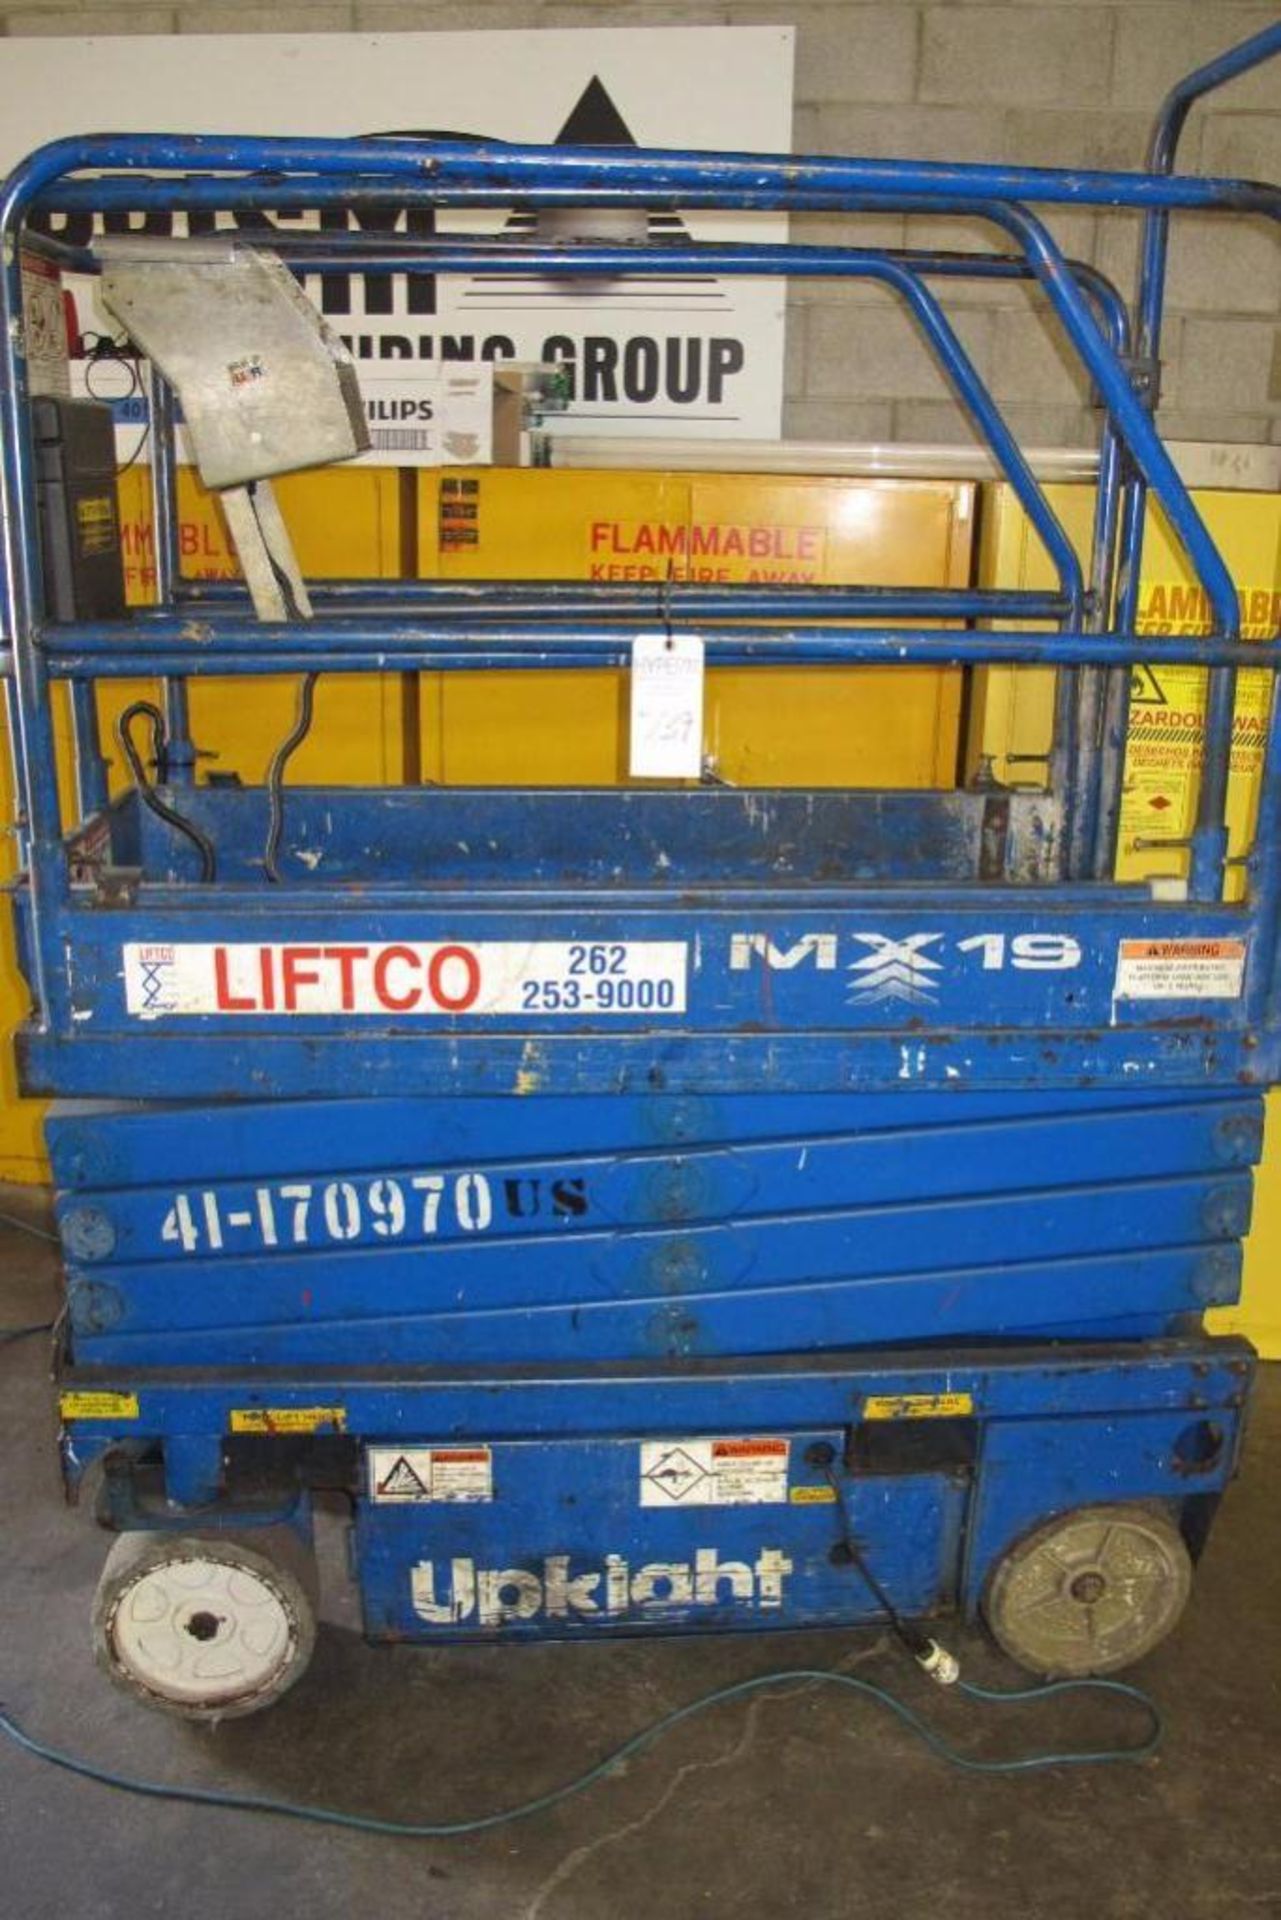 Upright Mdl. MX19, 19' Electric Scissor Lift, 19' Lift Cap. W/ Extendable Work Platform